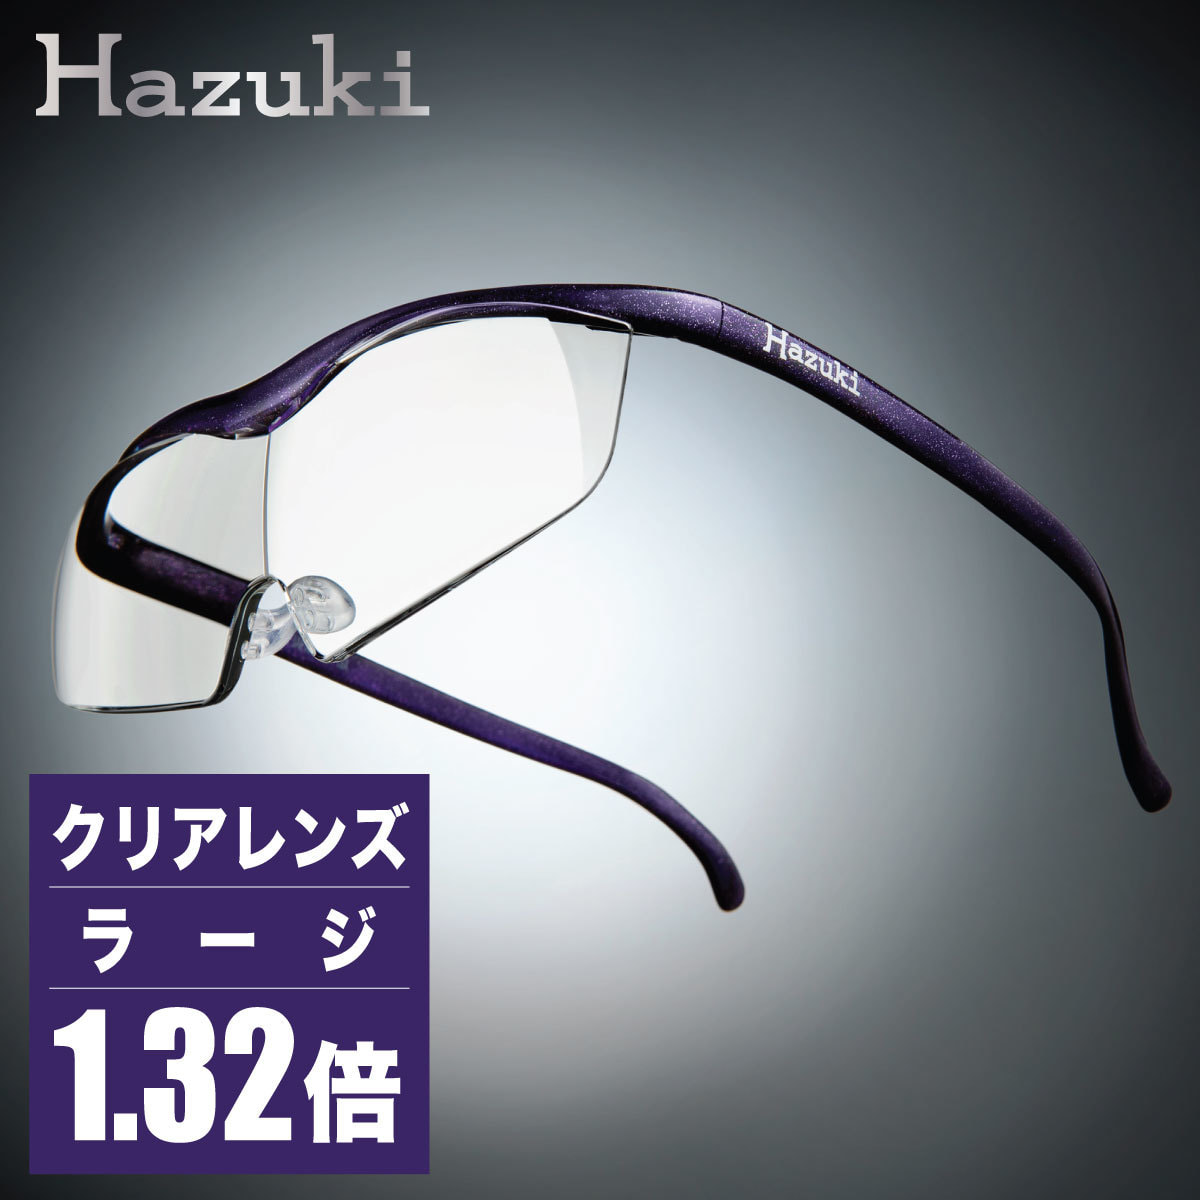 50%OFF ラージ ハズキルーペ Hazuki クリアレンズ (送料無料) 紫 1.32倍 - キッチン用品・調理器具